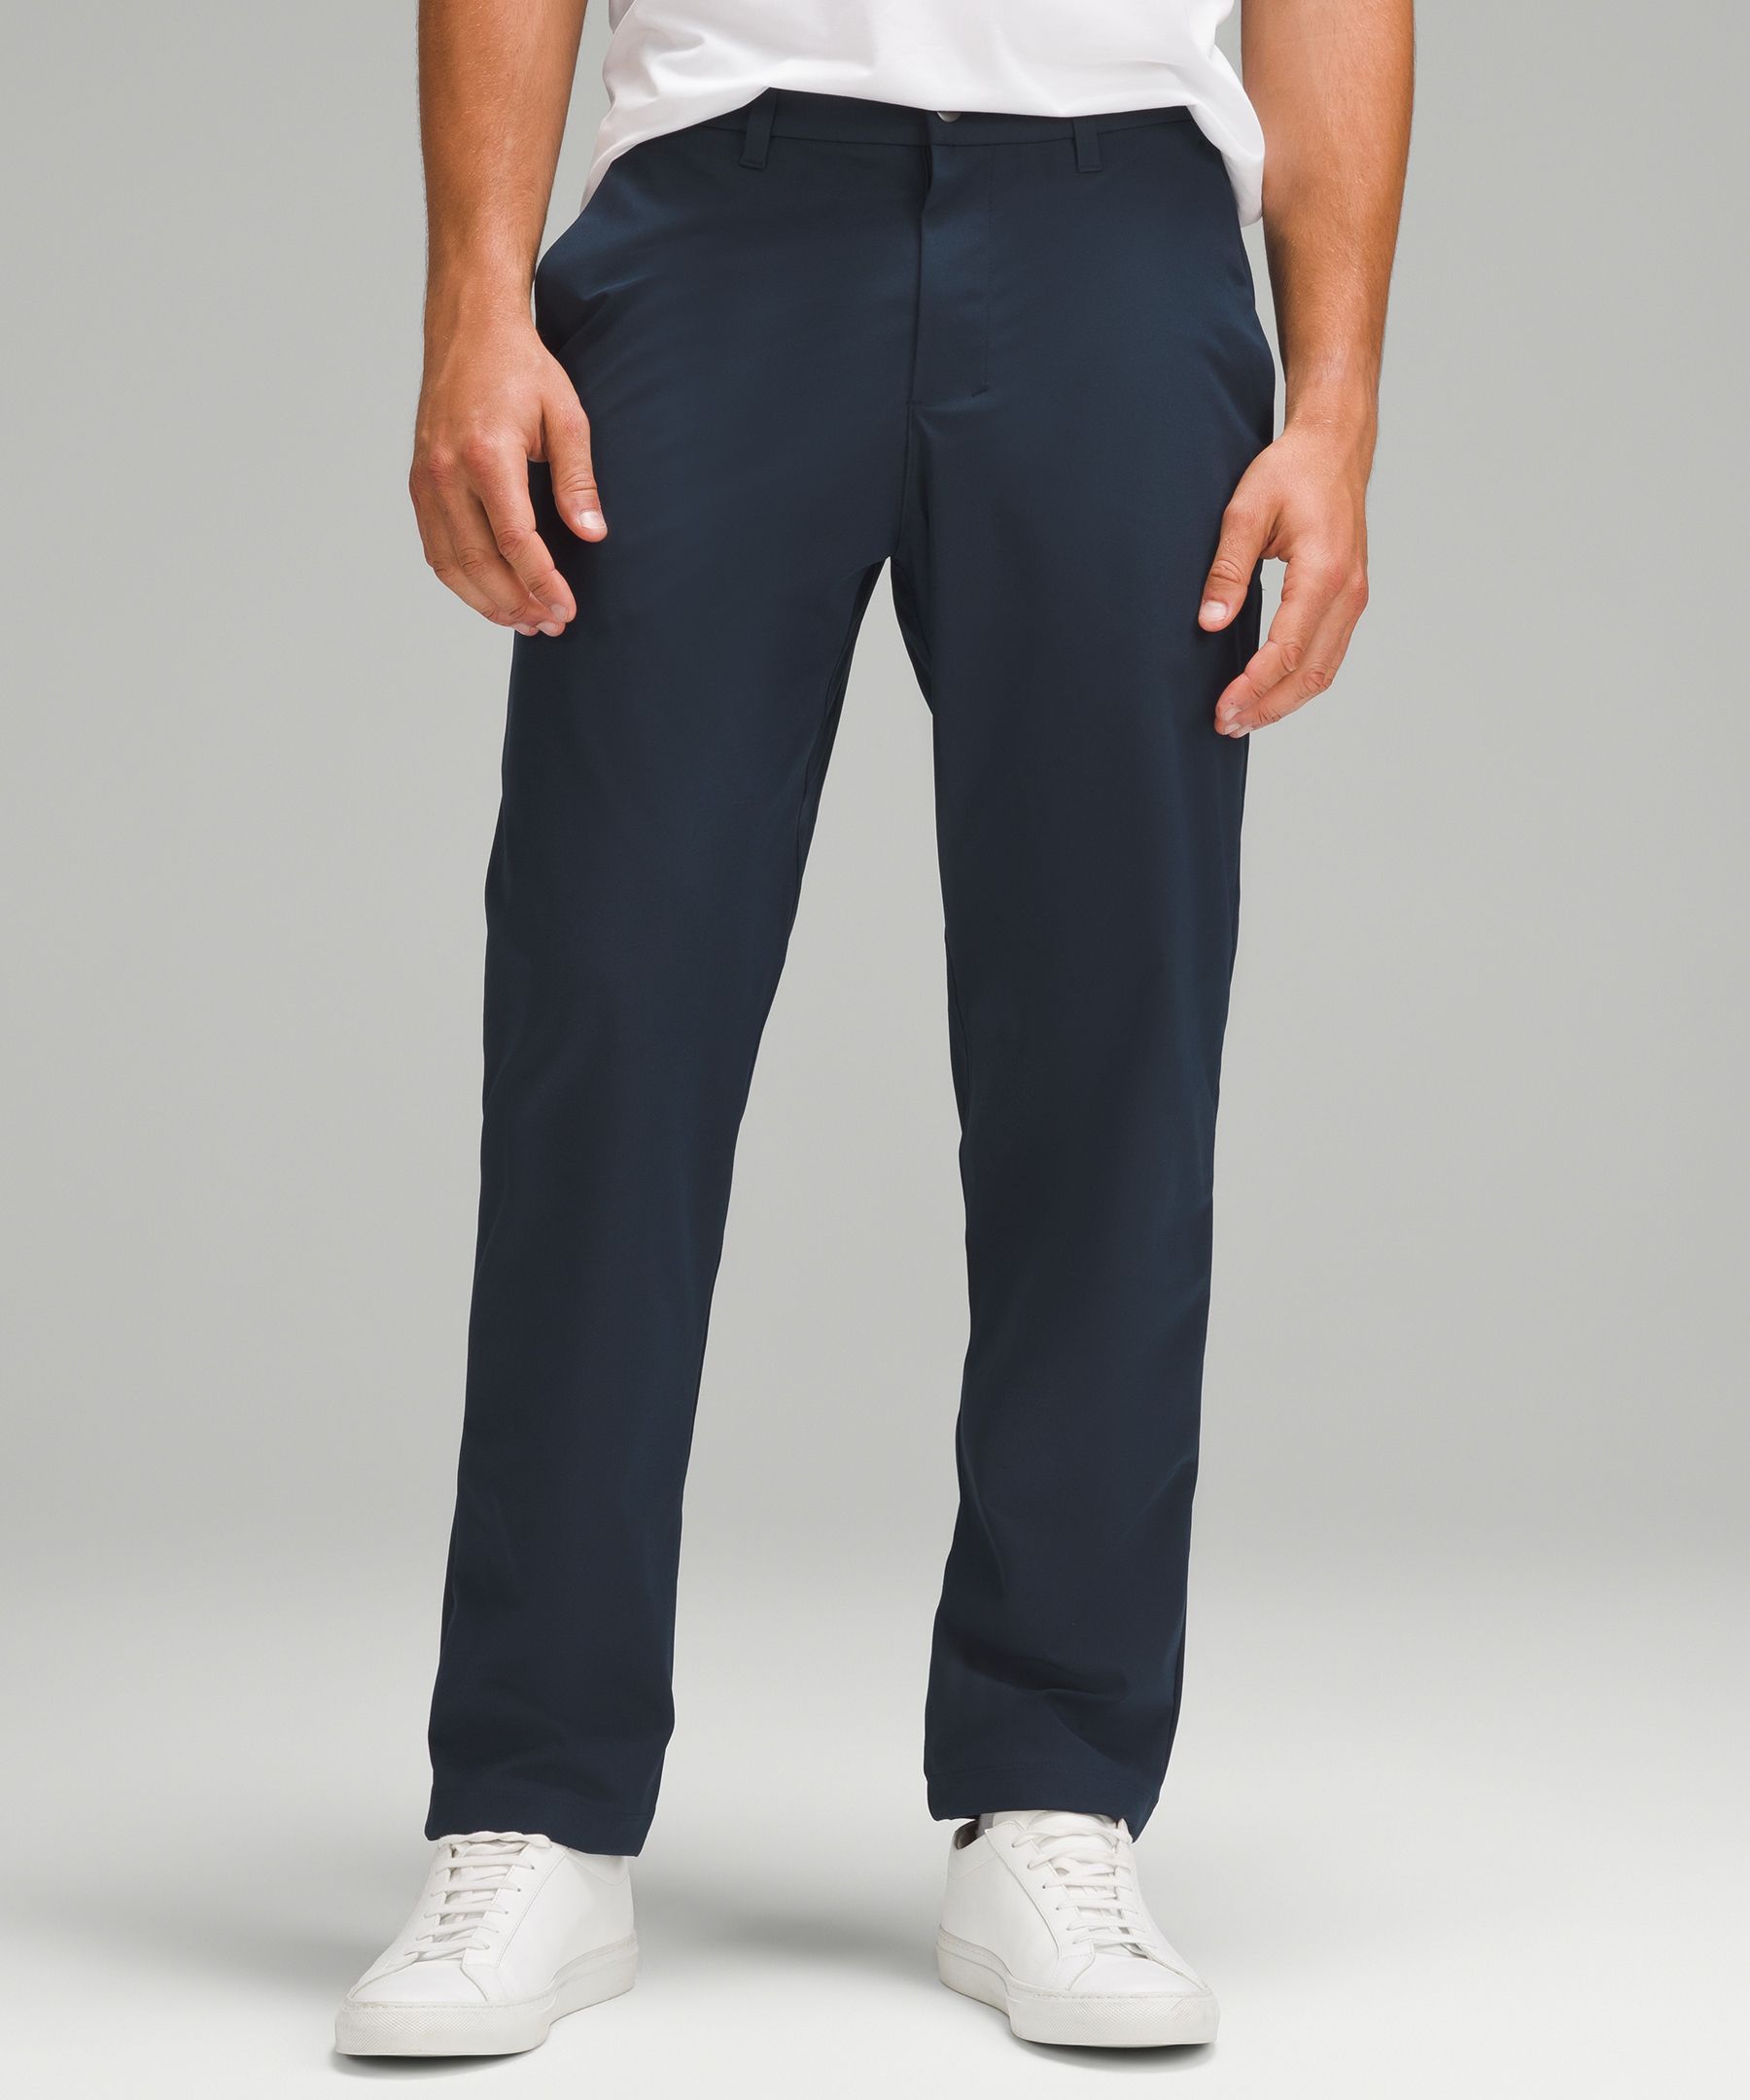 ABC Relaxed-Fit Trouser 34L *Warpstreme, Men's Trousers